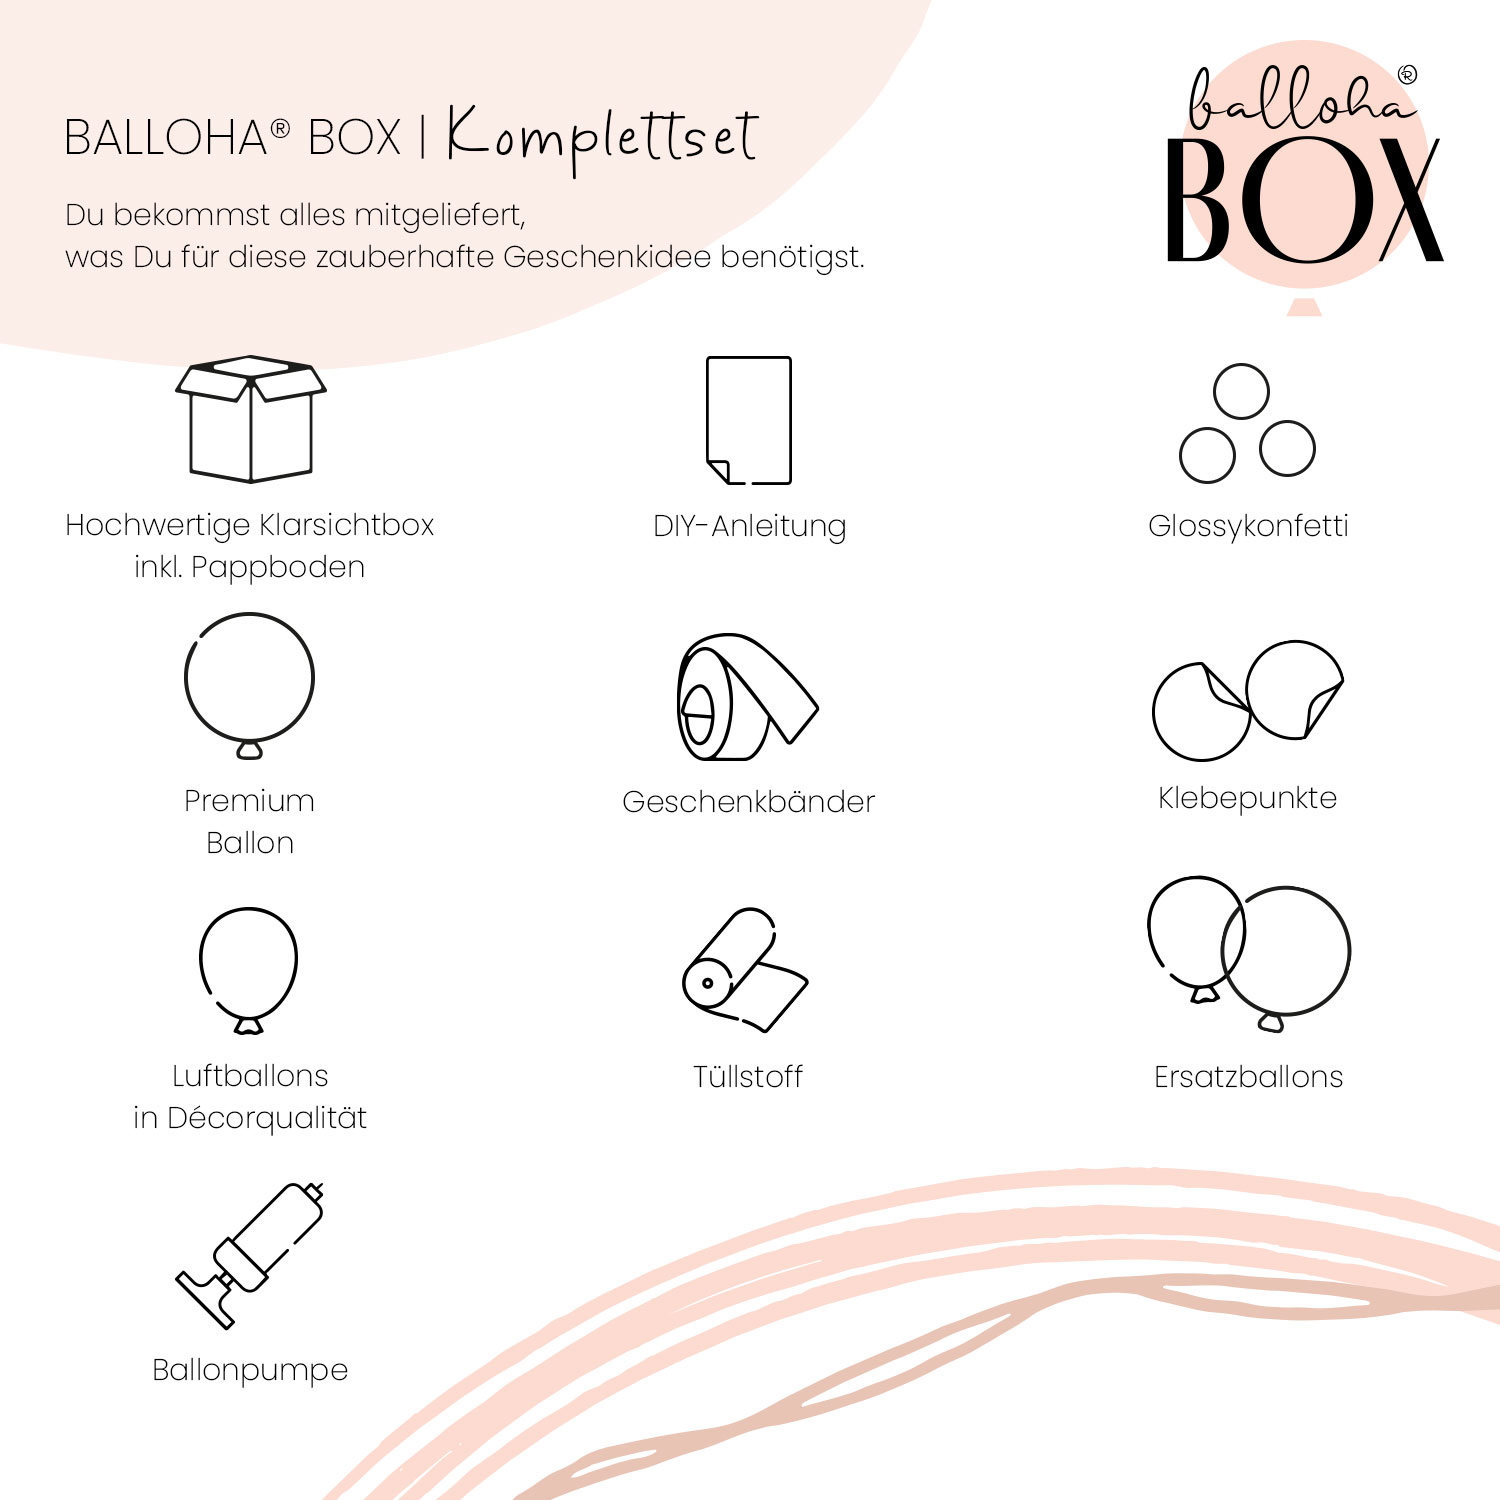 Balloha® Box mit Foto - DIY Hello